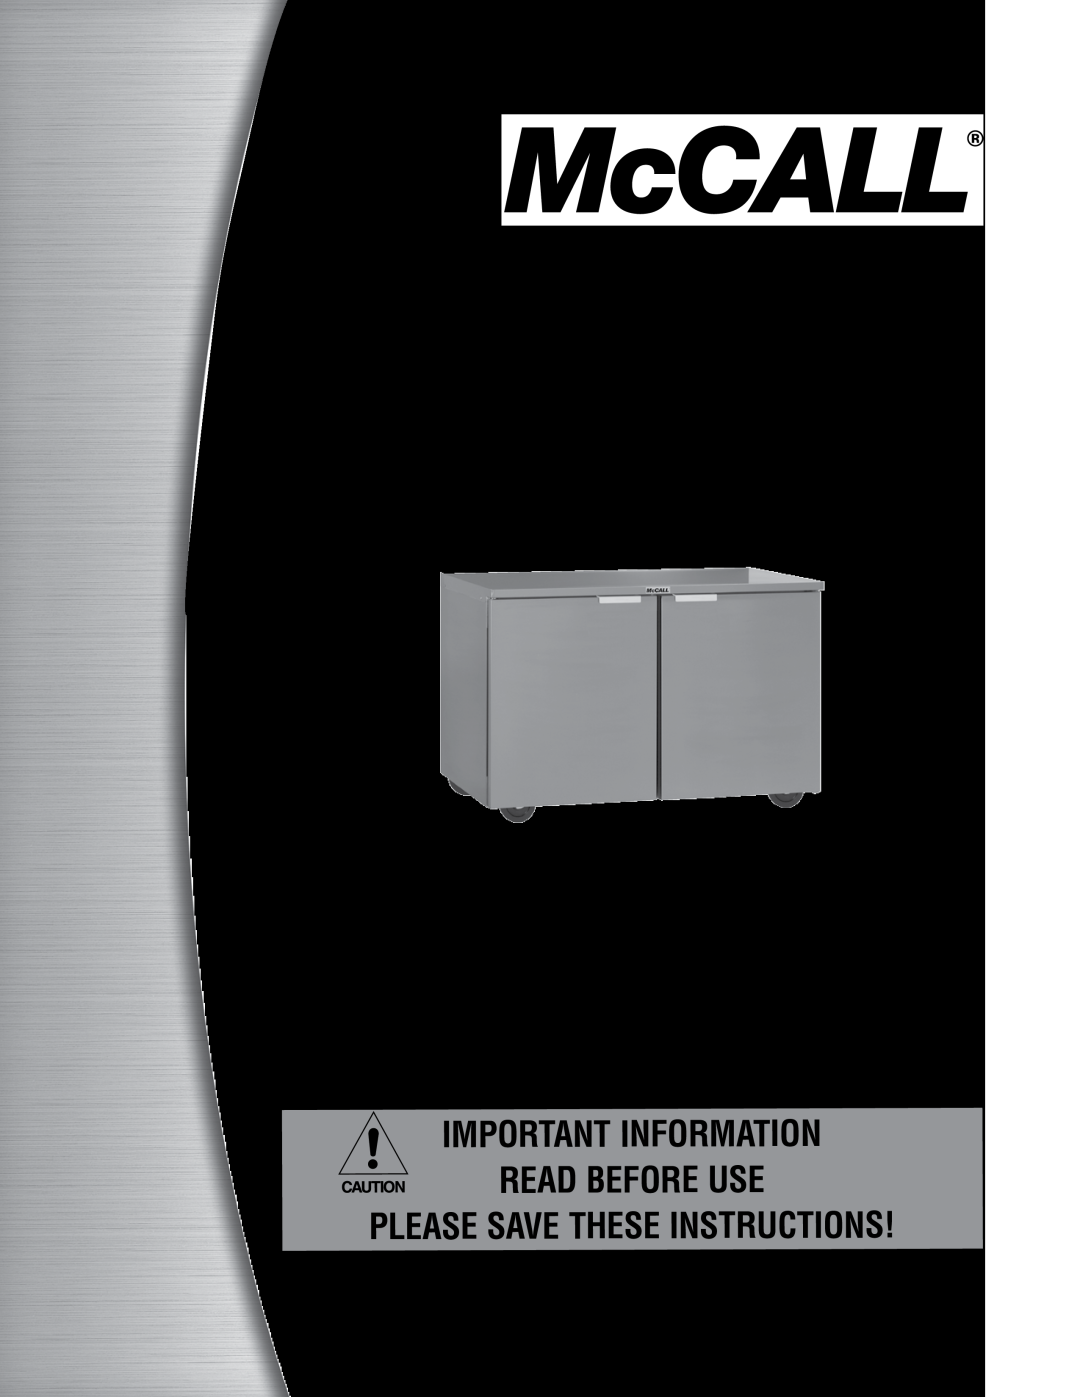 McCall Refrigeration MCCSTR27, MCCSTR48 manual Compact Refrigerators & Freezers, Service, Installation and Care Manual 